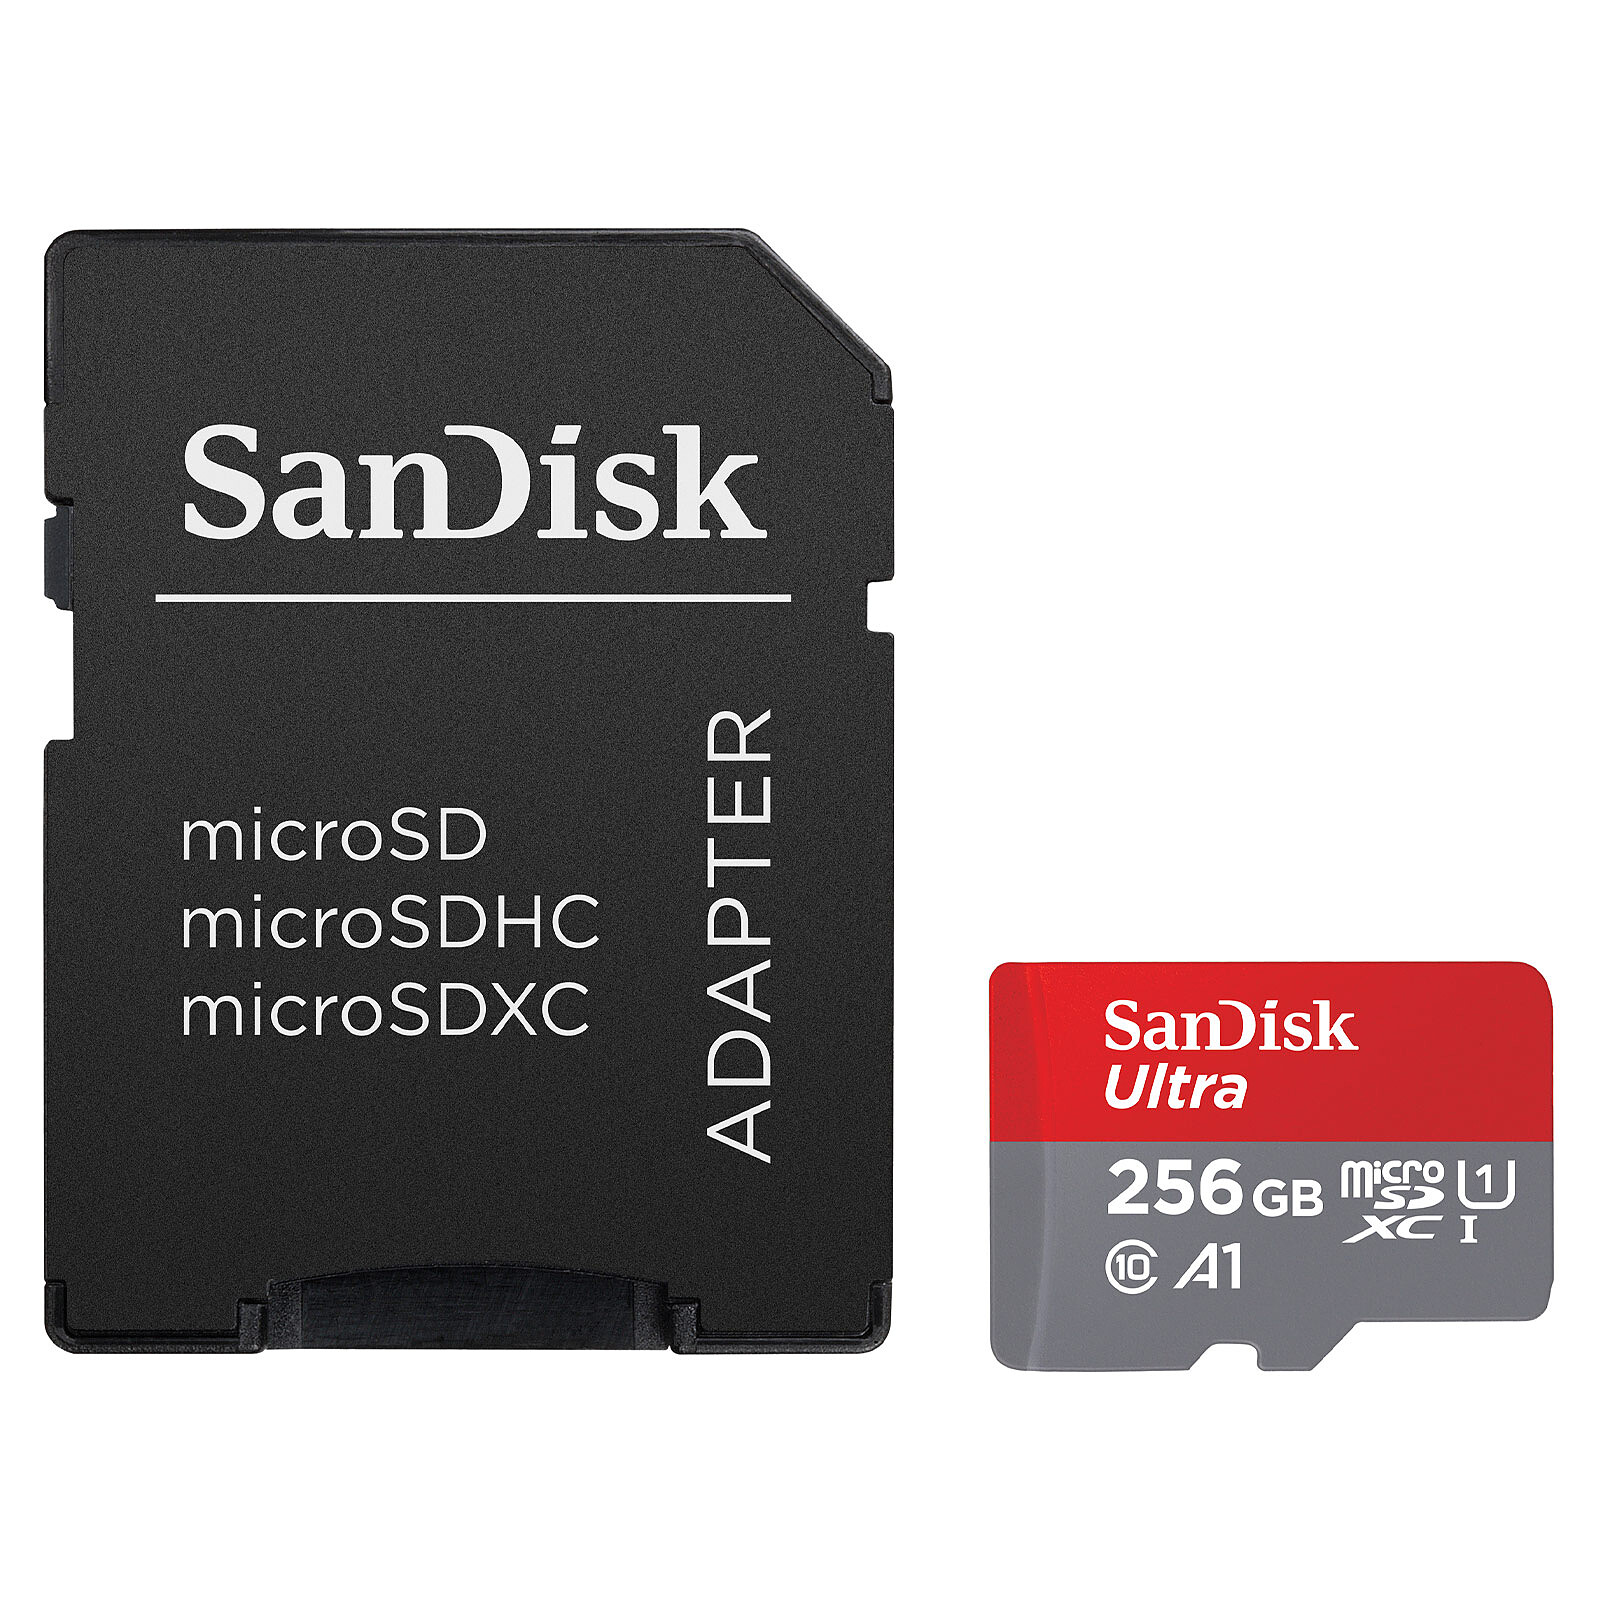 SanDisk Ultra microSD UHS-I U1 256 GB 150 MB/s + Adaptador SD - Tarjeta de memoria Sandisk en